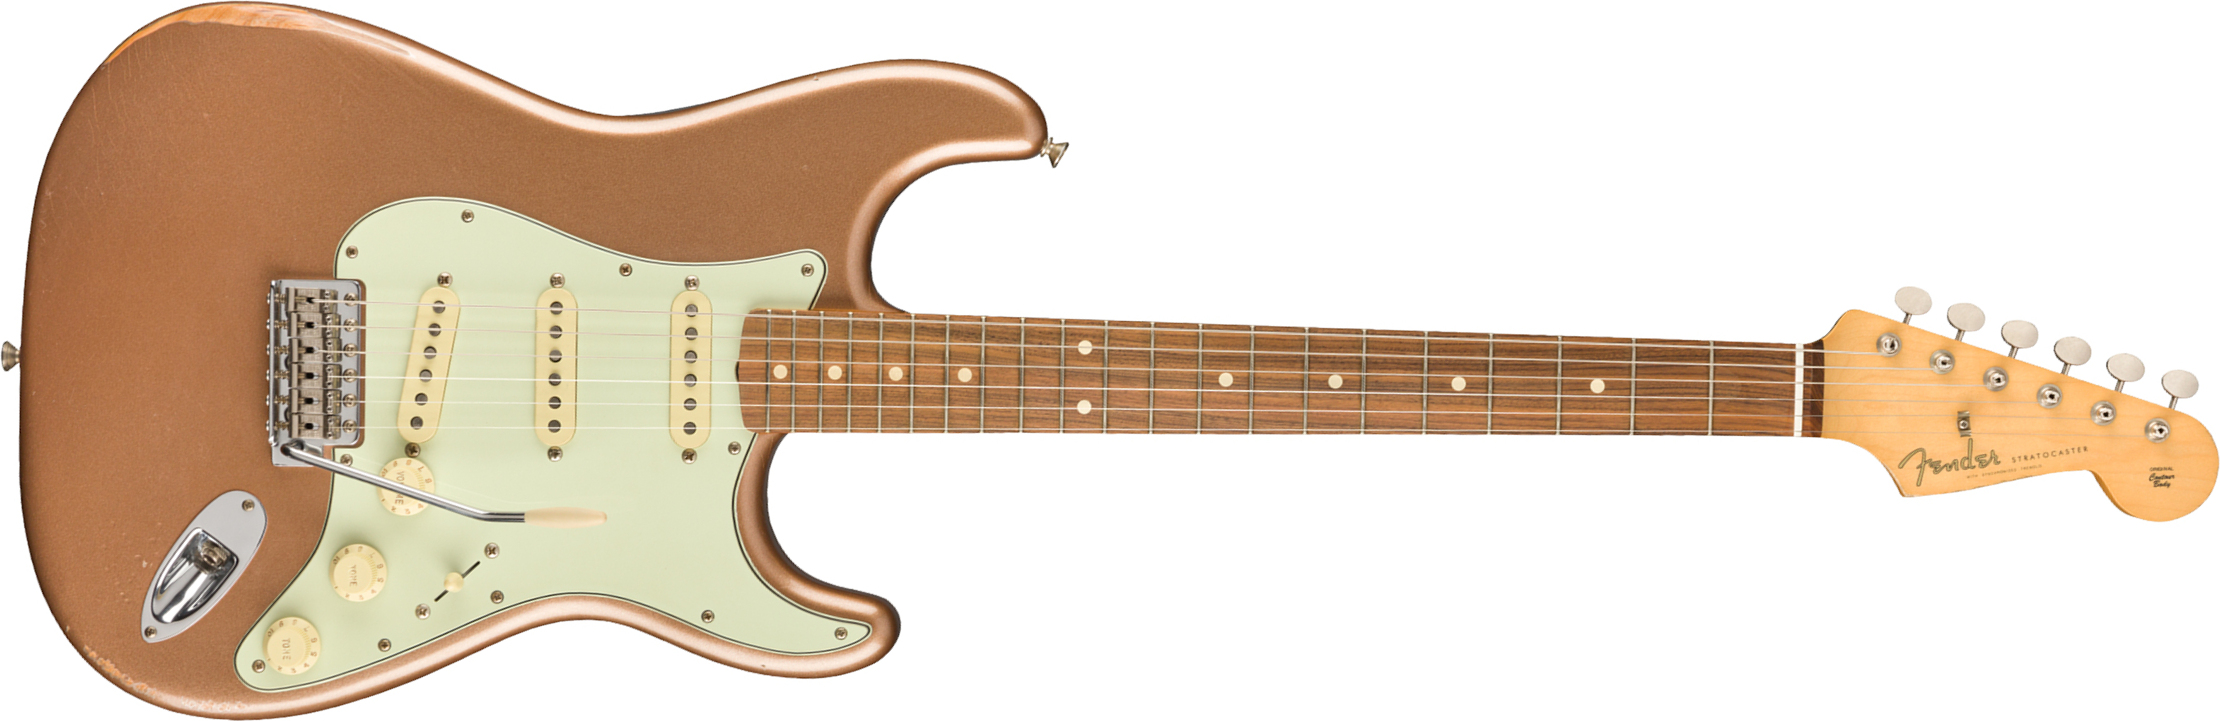 Fender Strat 60s Road Worn Mex Pf - Firemist Gold - Str shape electric guitar - Main picture